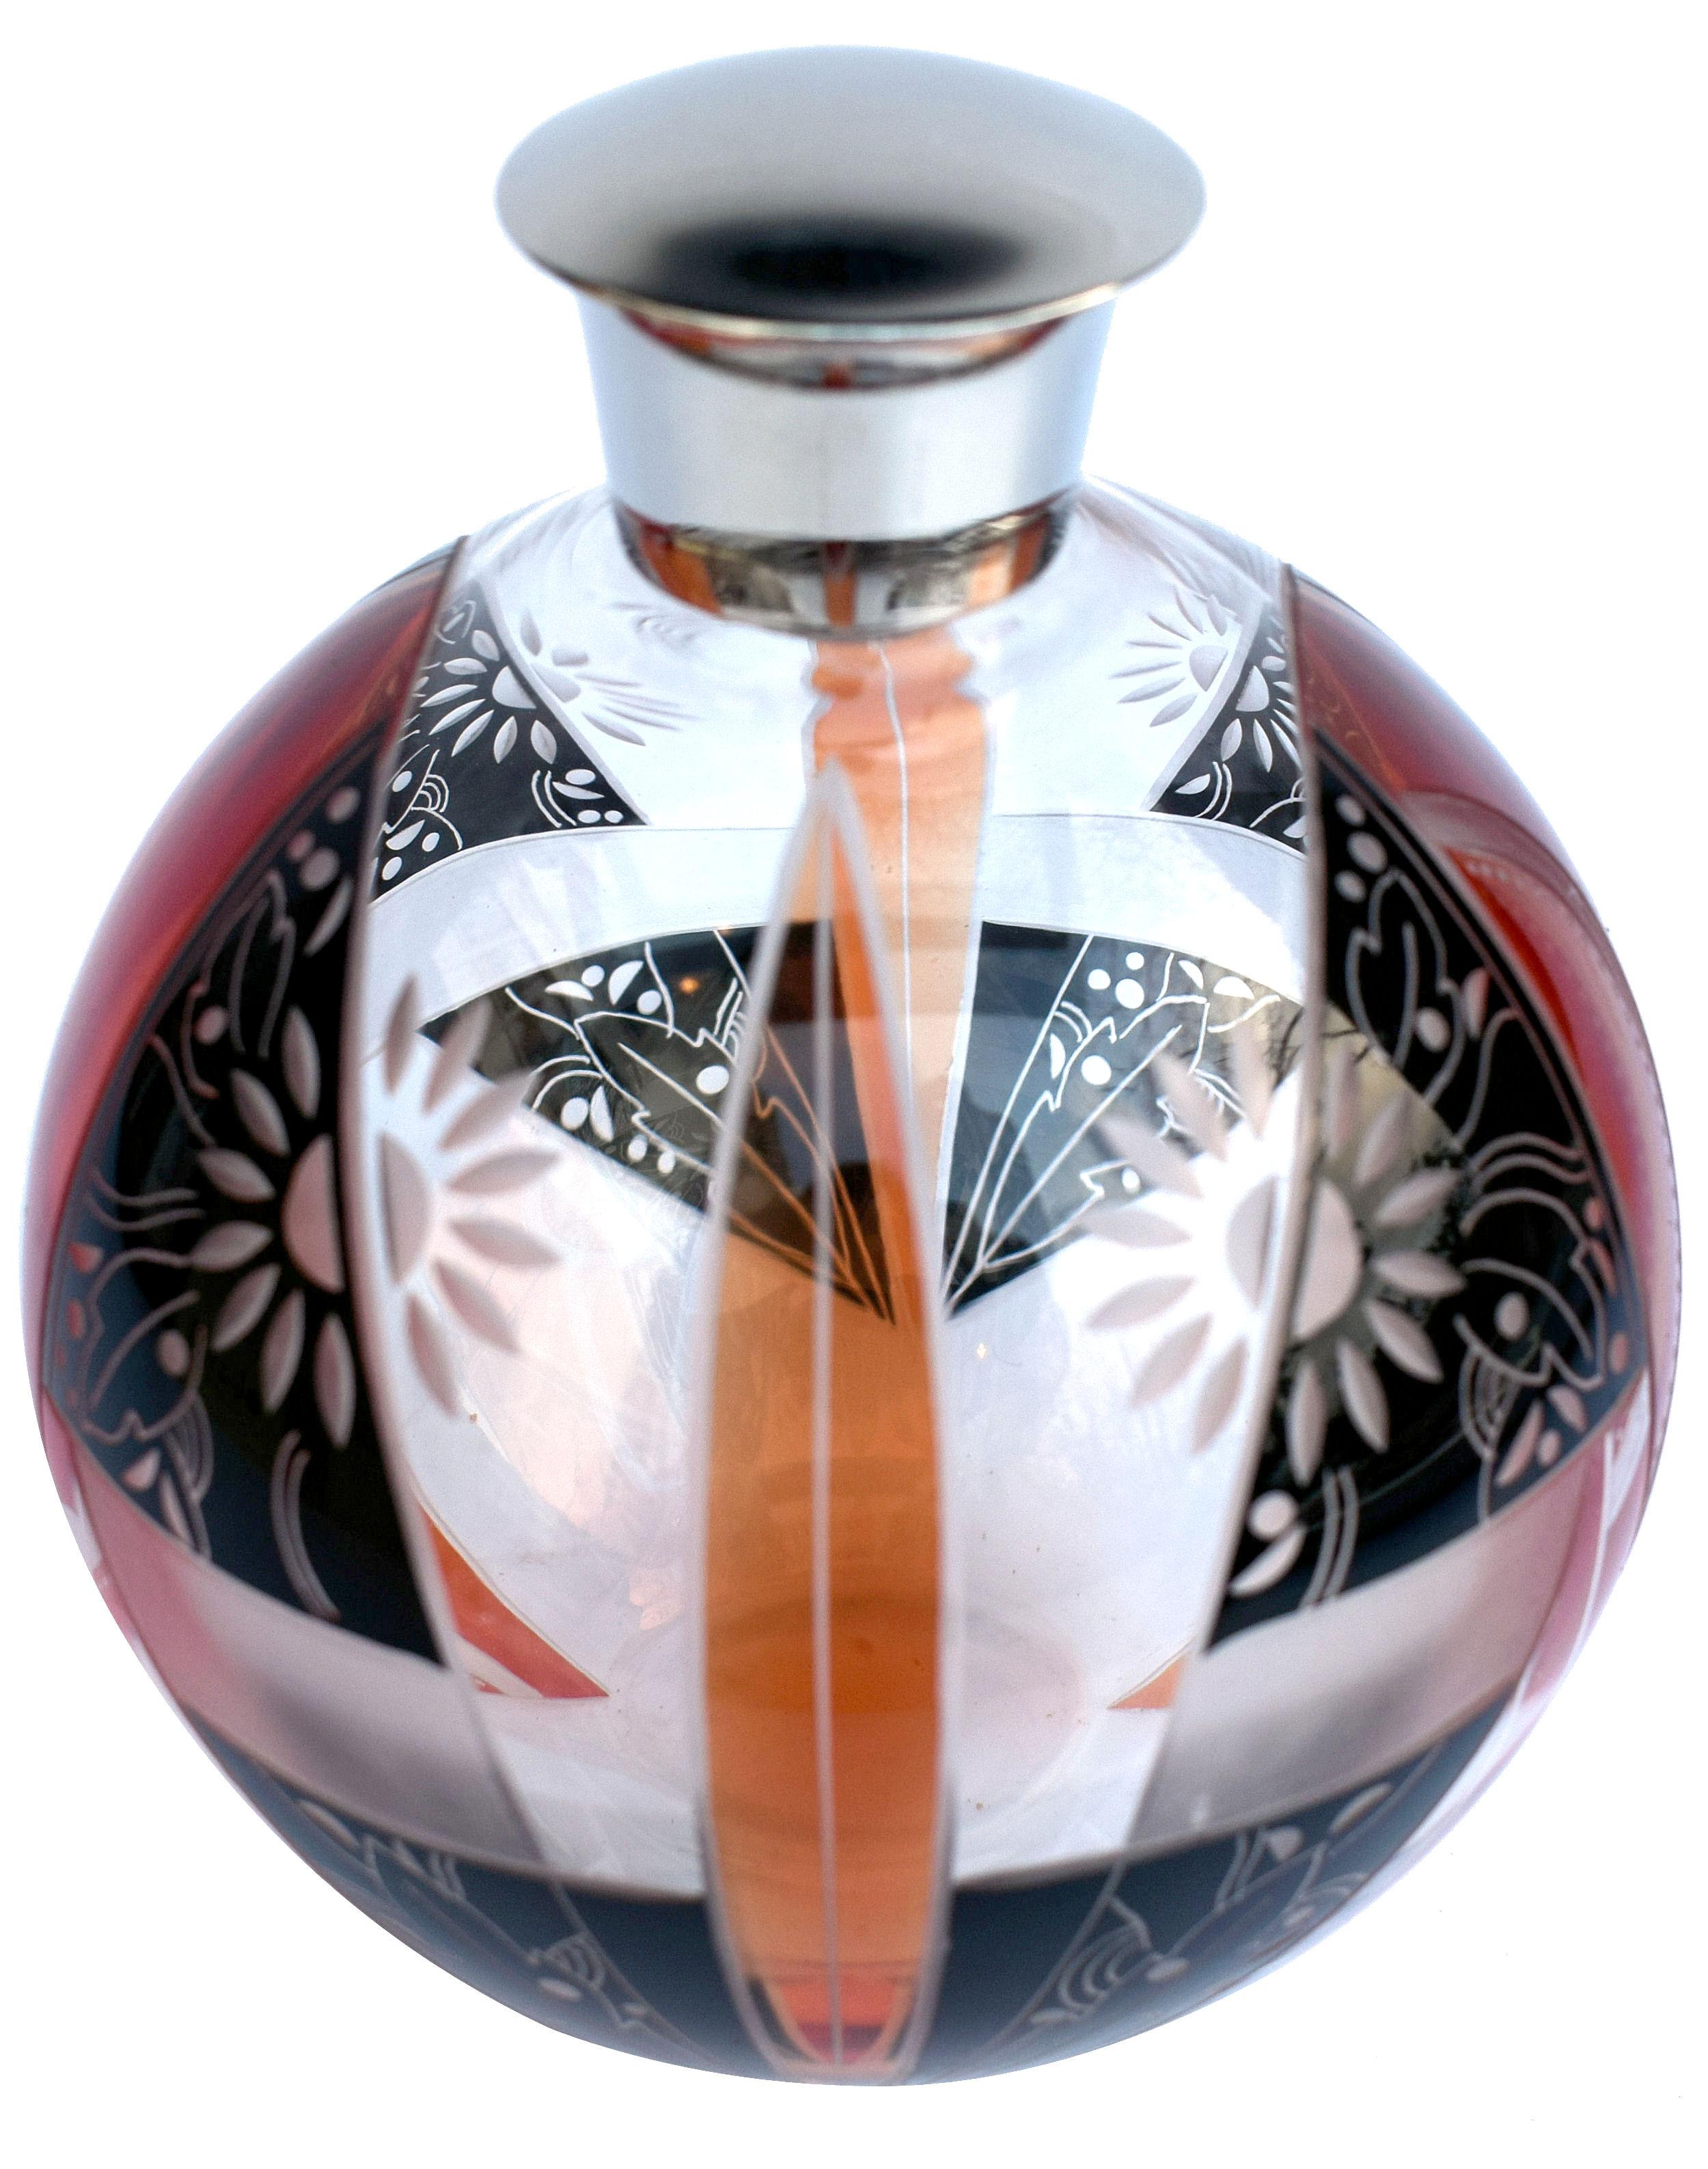 Czech Art Deco Glass and Enamel Perfume Bottle by Karl Palda